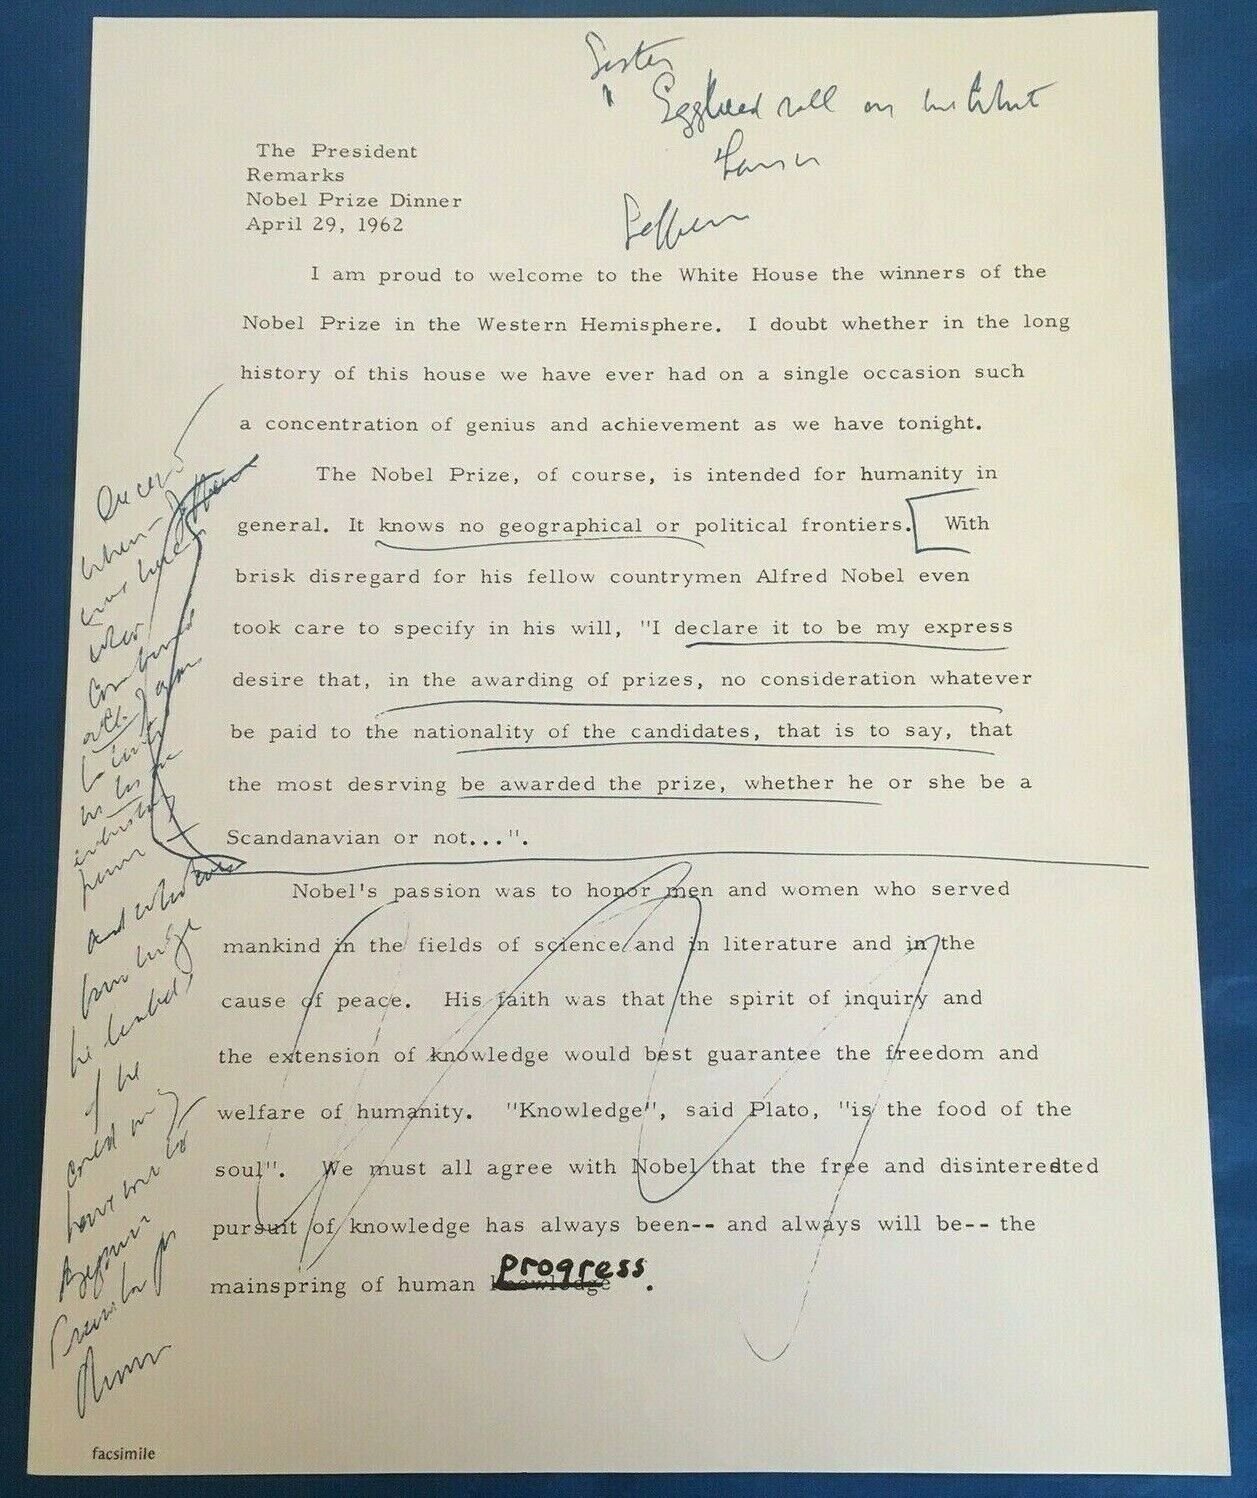 John F Kennedy Speech Notes 1962 Nobel Prize Dinner Quarantine Press Release